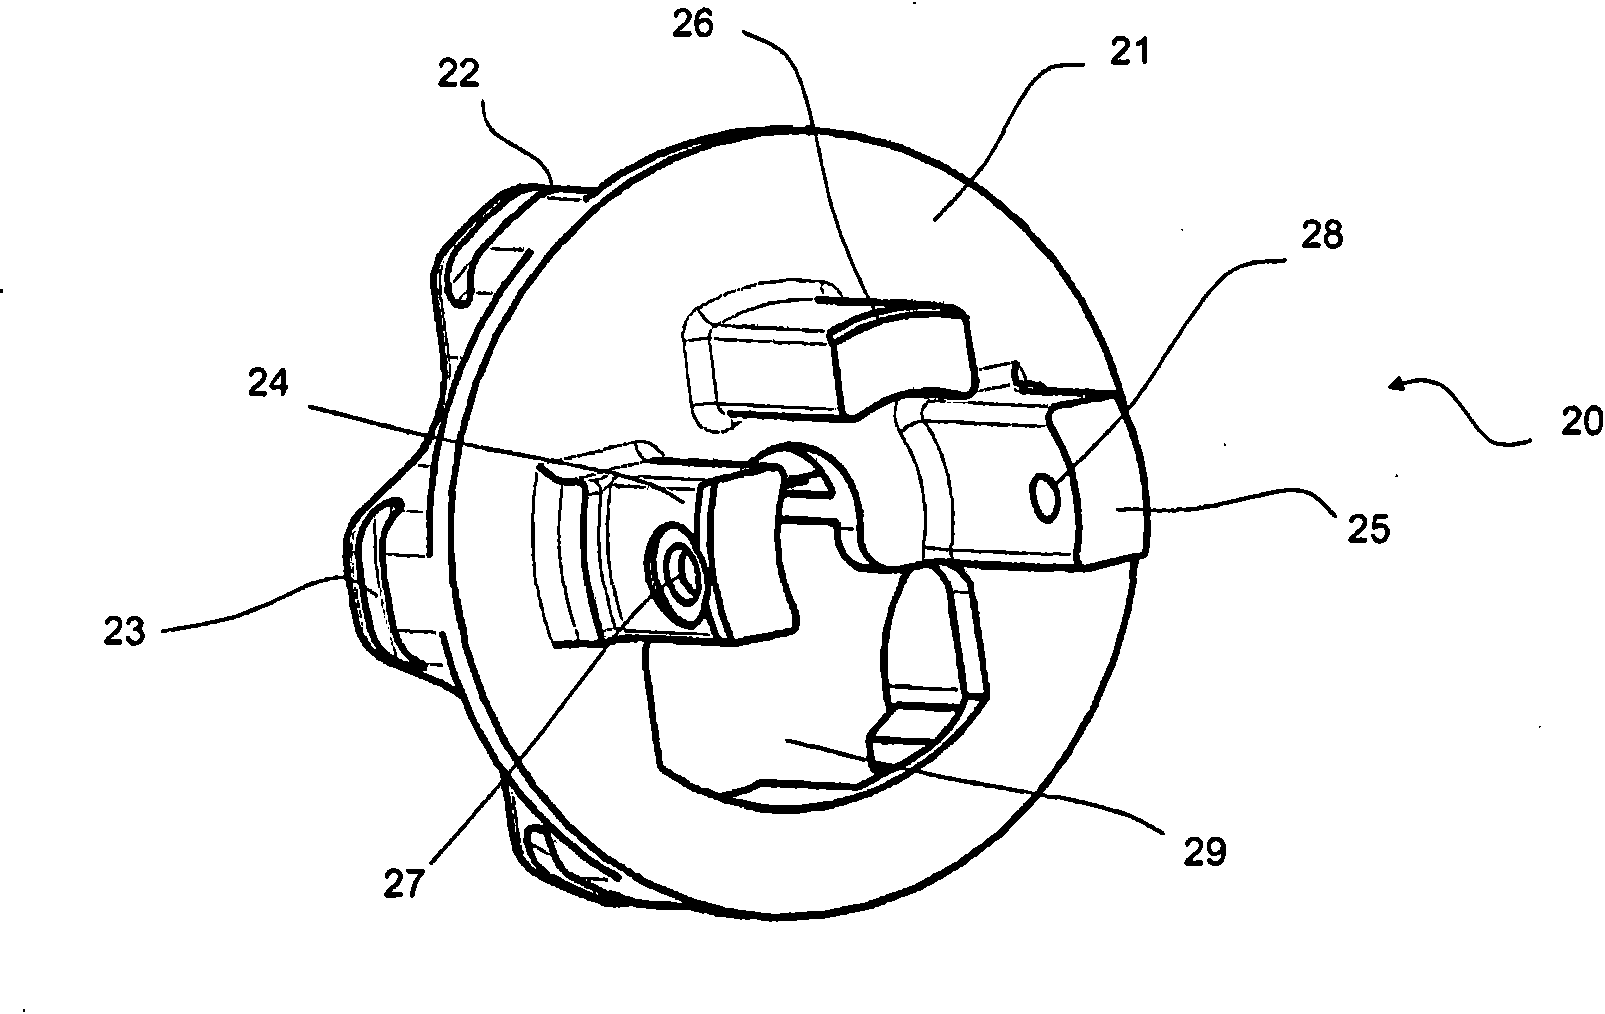 Tubular actuator for driving a roller shutter